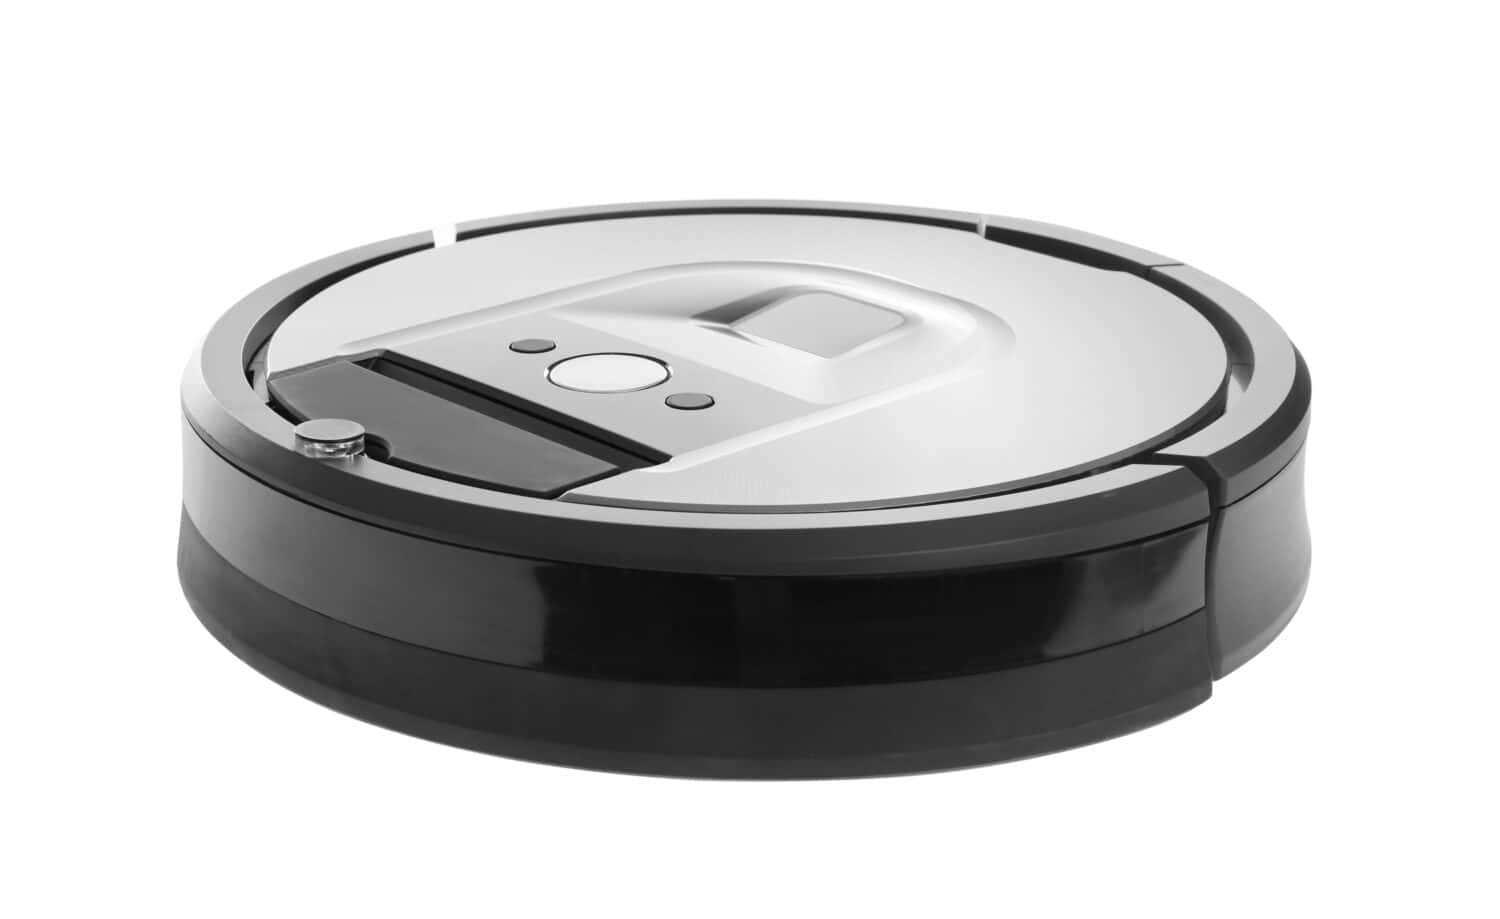 iRobot Roomba i7 vs iRobot Roomba j7/j7+ Side-by-Side Vacuum